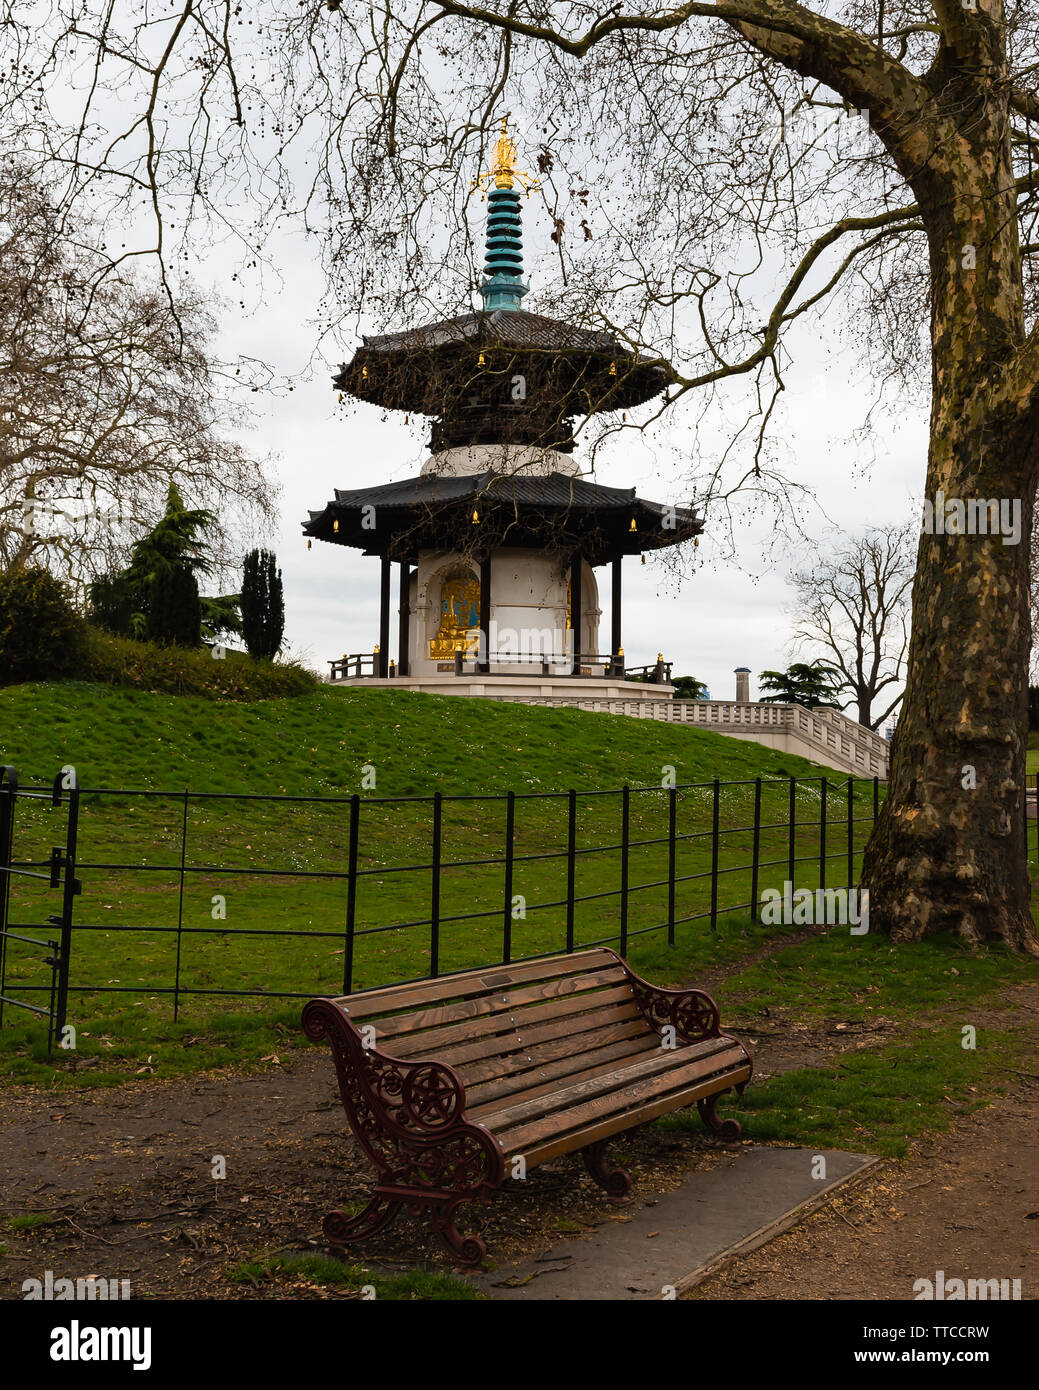 London - The London Peace Pagoda, Battersea Park - March 20, 2019 Stock Photo